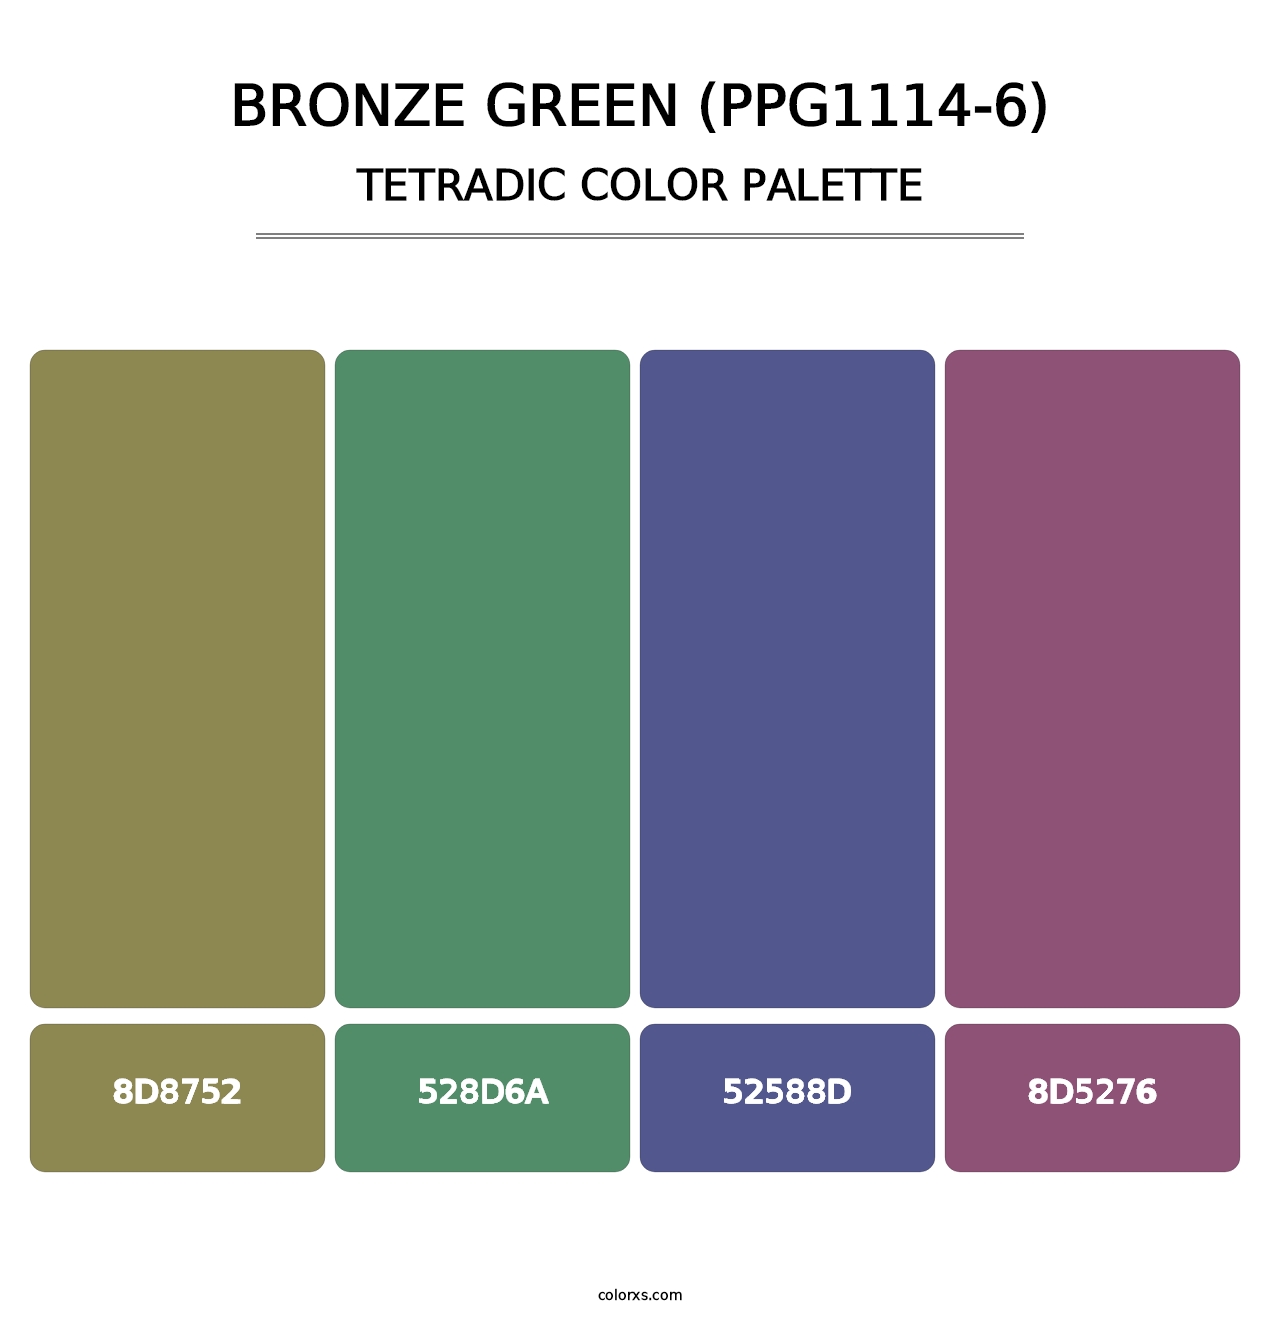 Bronze Green (PPG1114-6) - Tetradic Color Palette